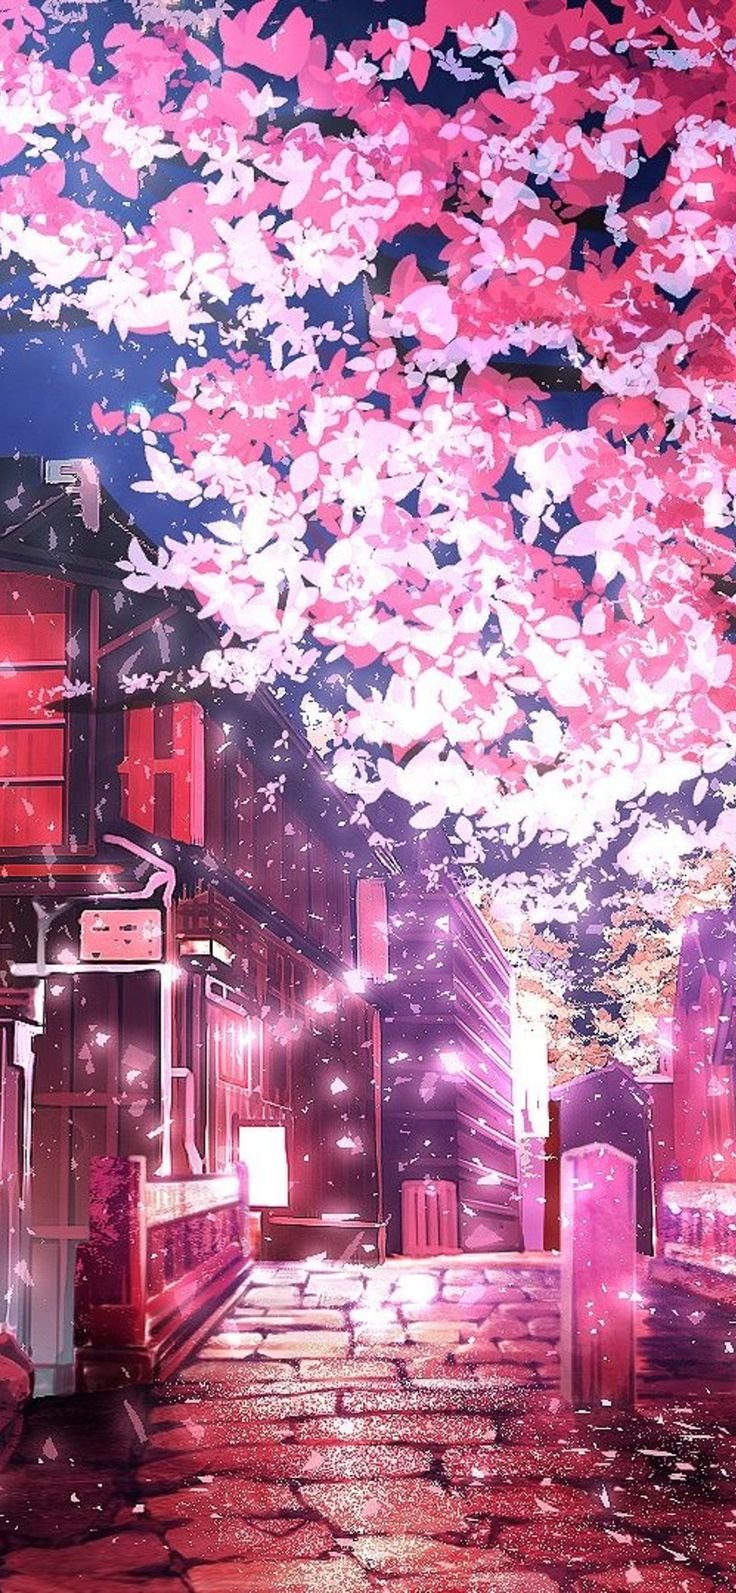 The Man Under the Sakura Tree | Quotev